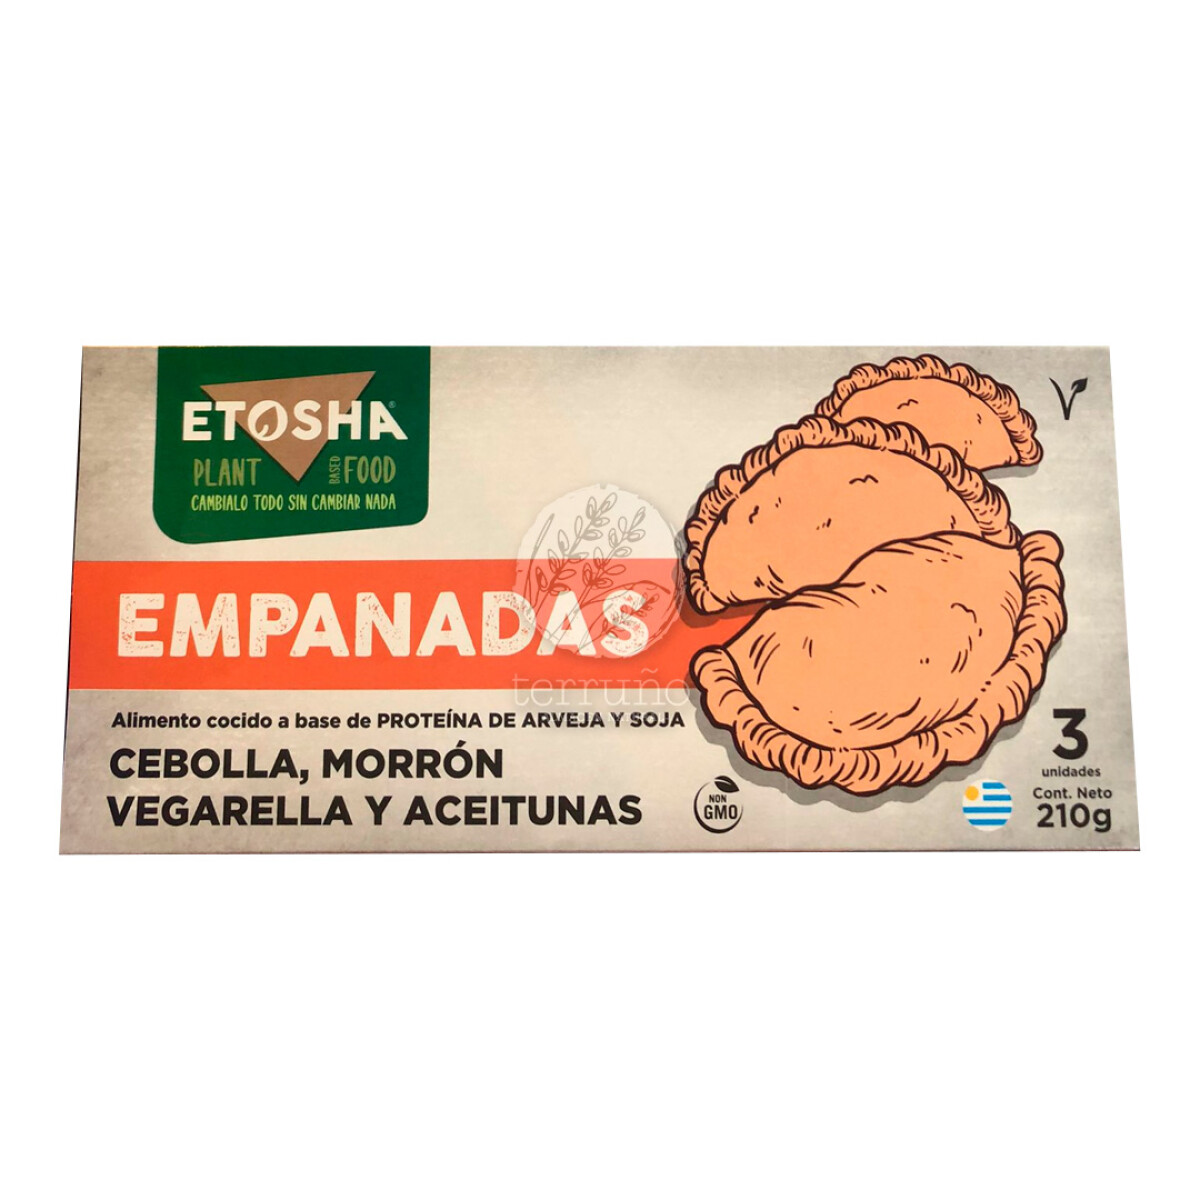 Empanadas (ceb/morr/aceit/vegarella) Etosha- 3 uds. - 210 gr 